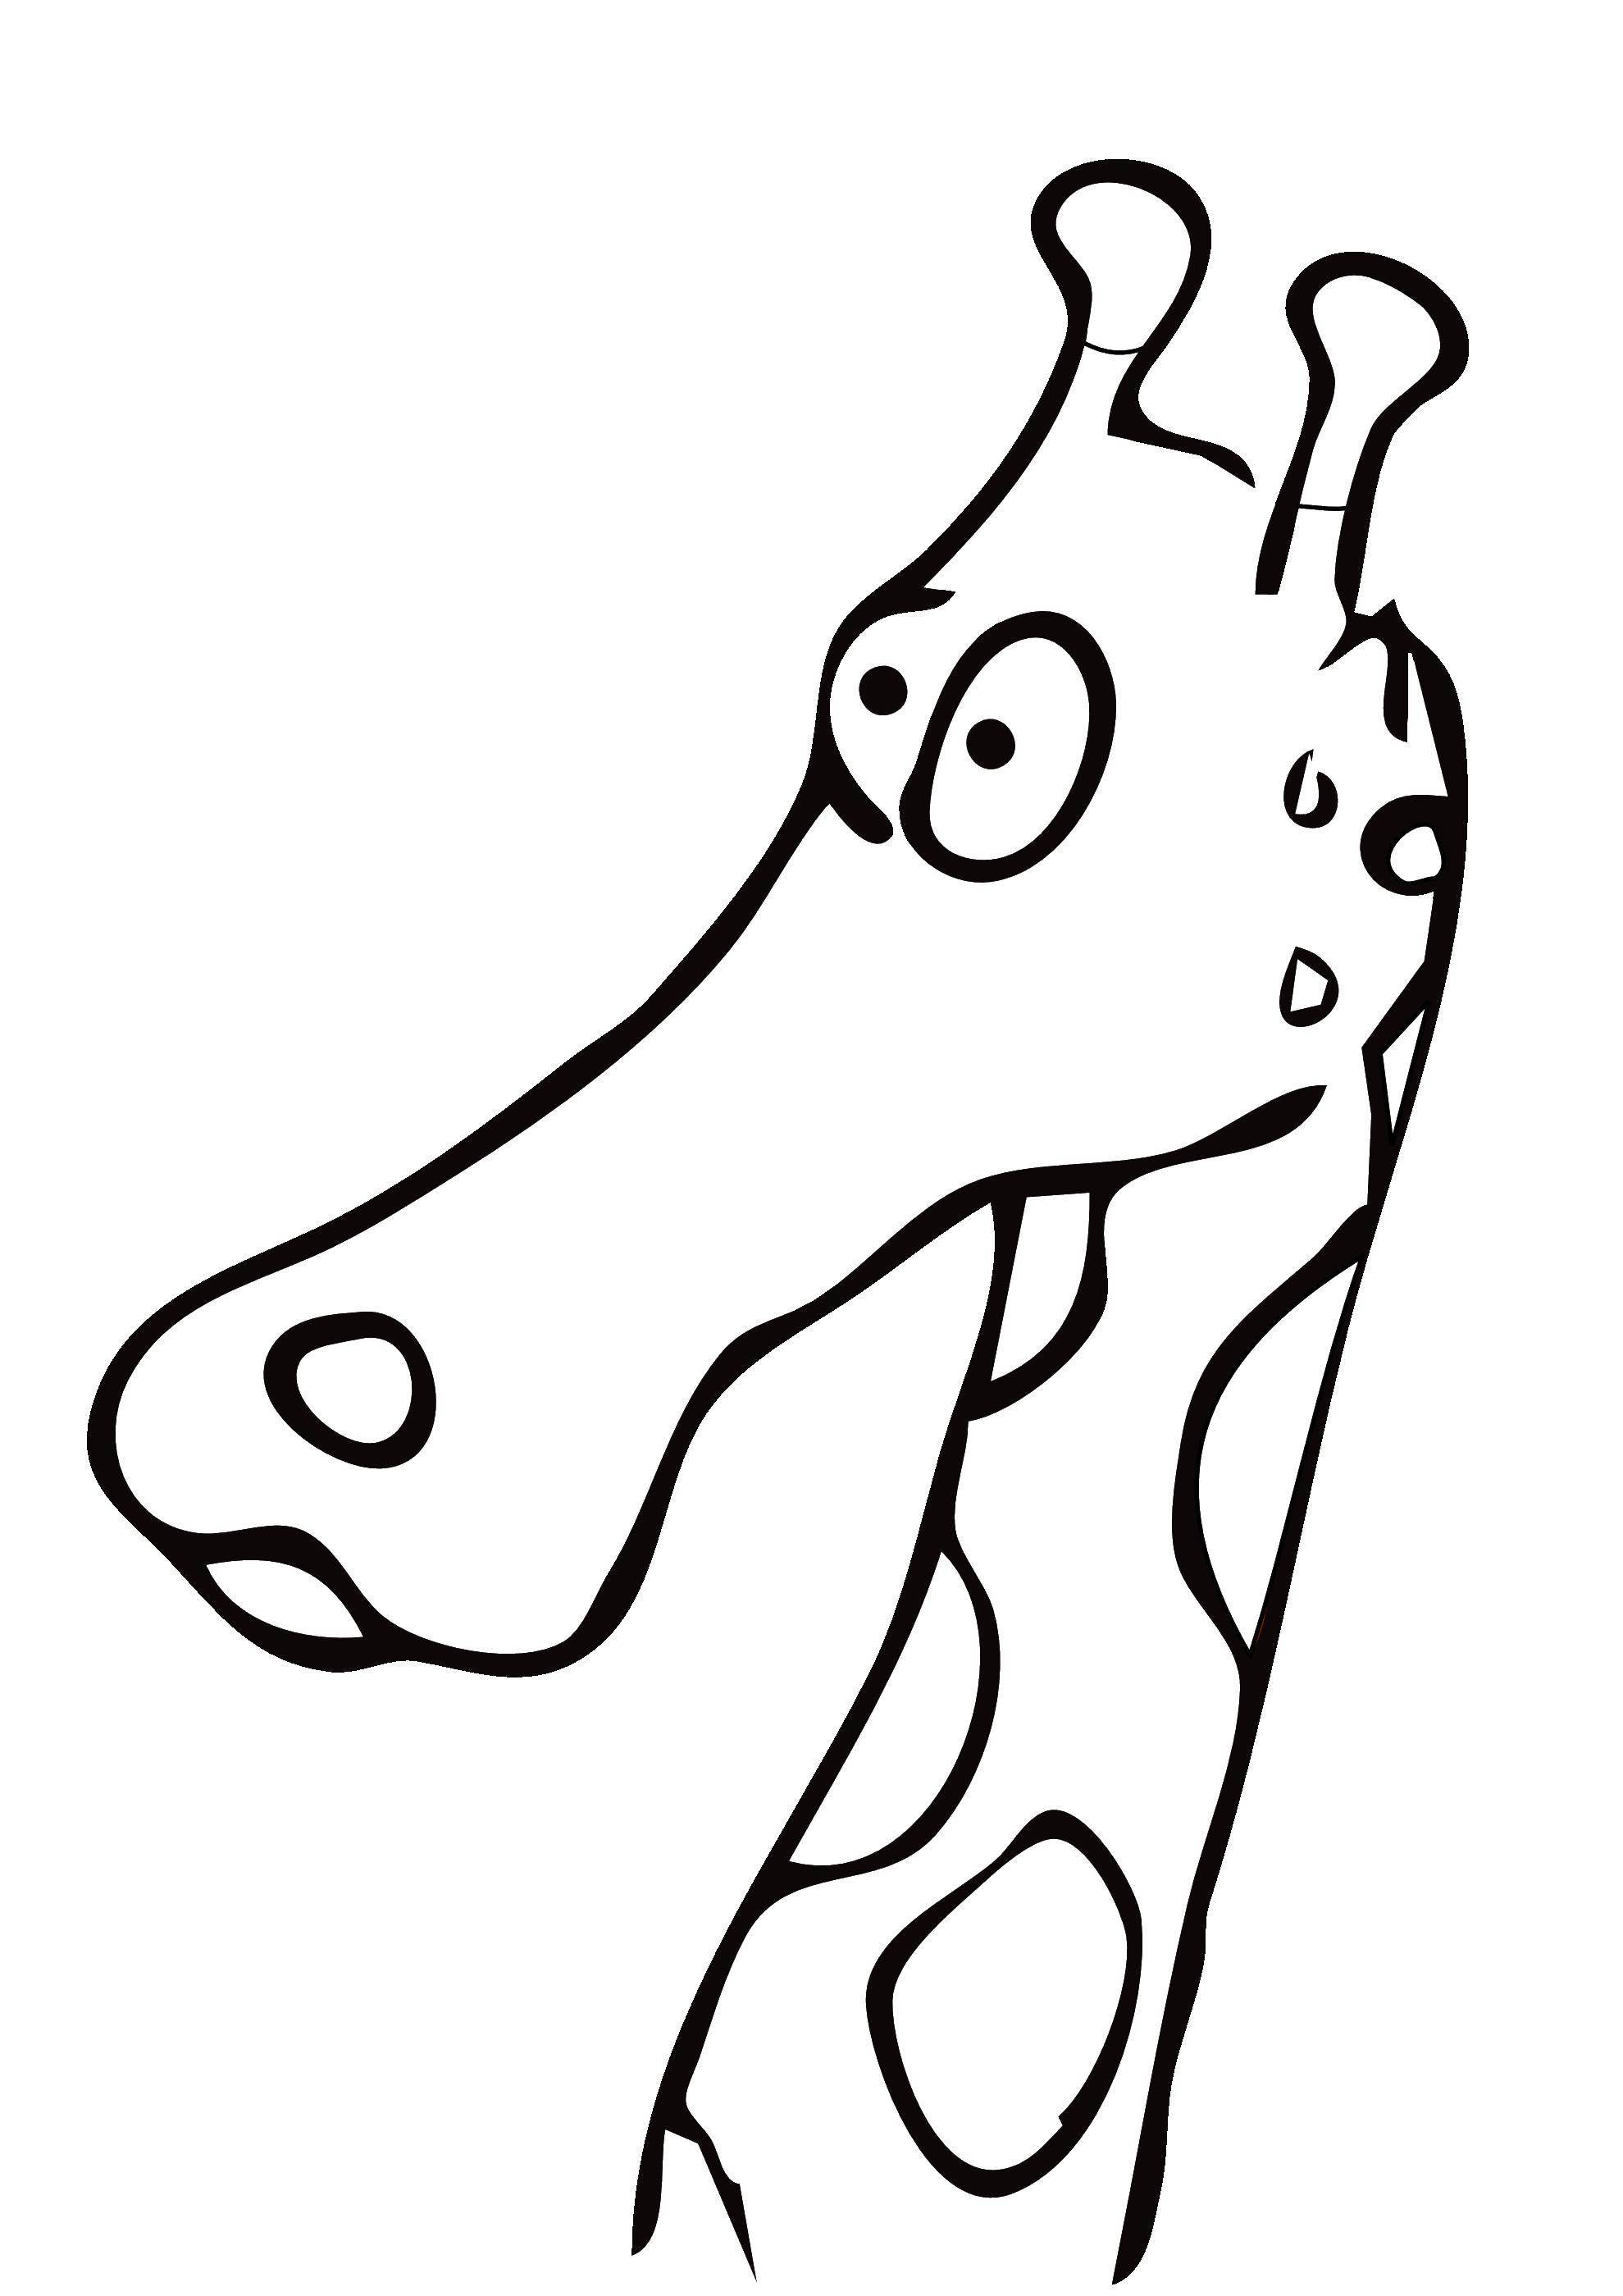 Название: Раскраска Голова жирафа. Категория: Контур жирафа для вырезания. Теги: контур, жираф.